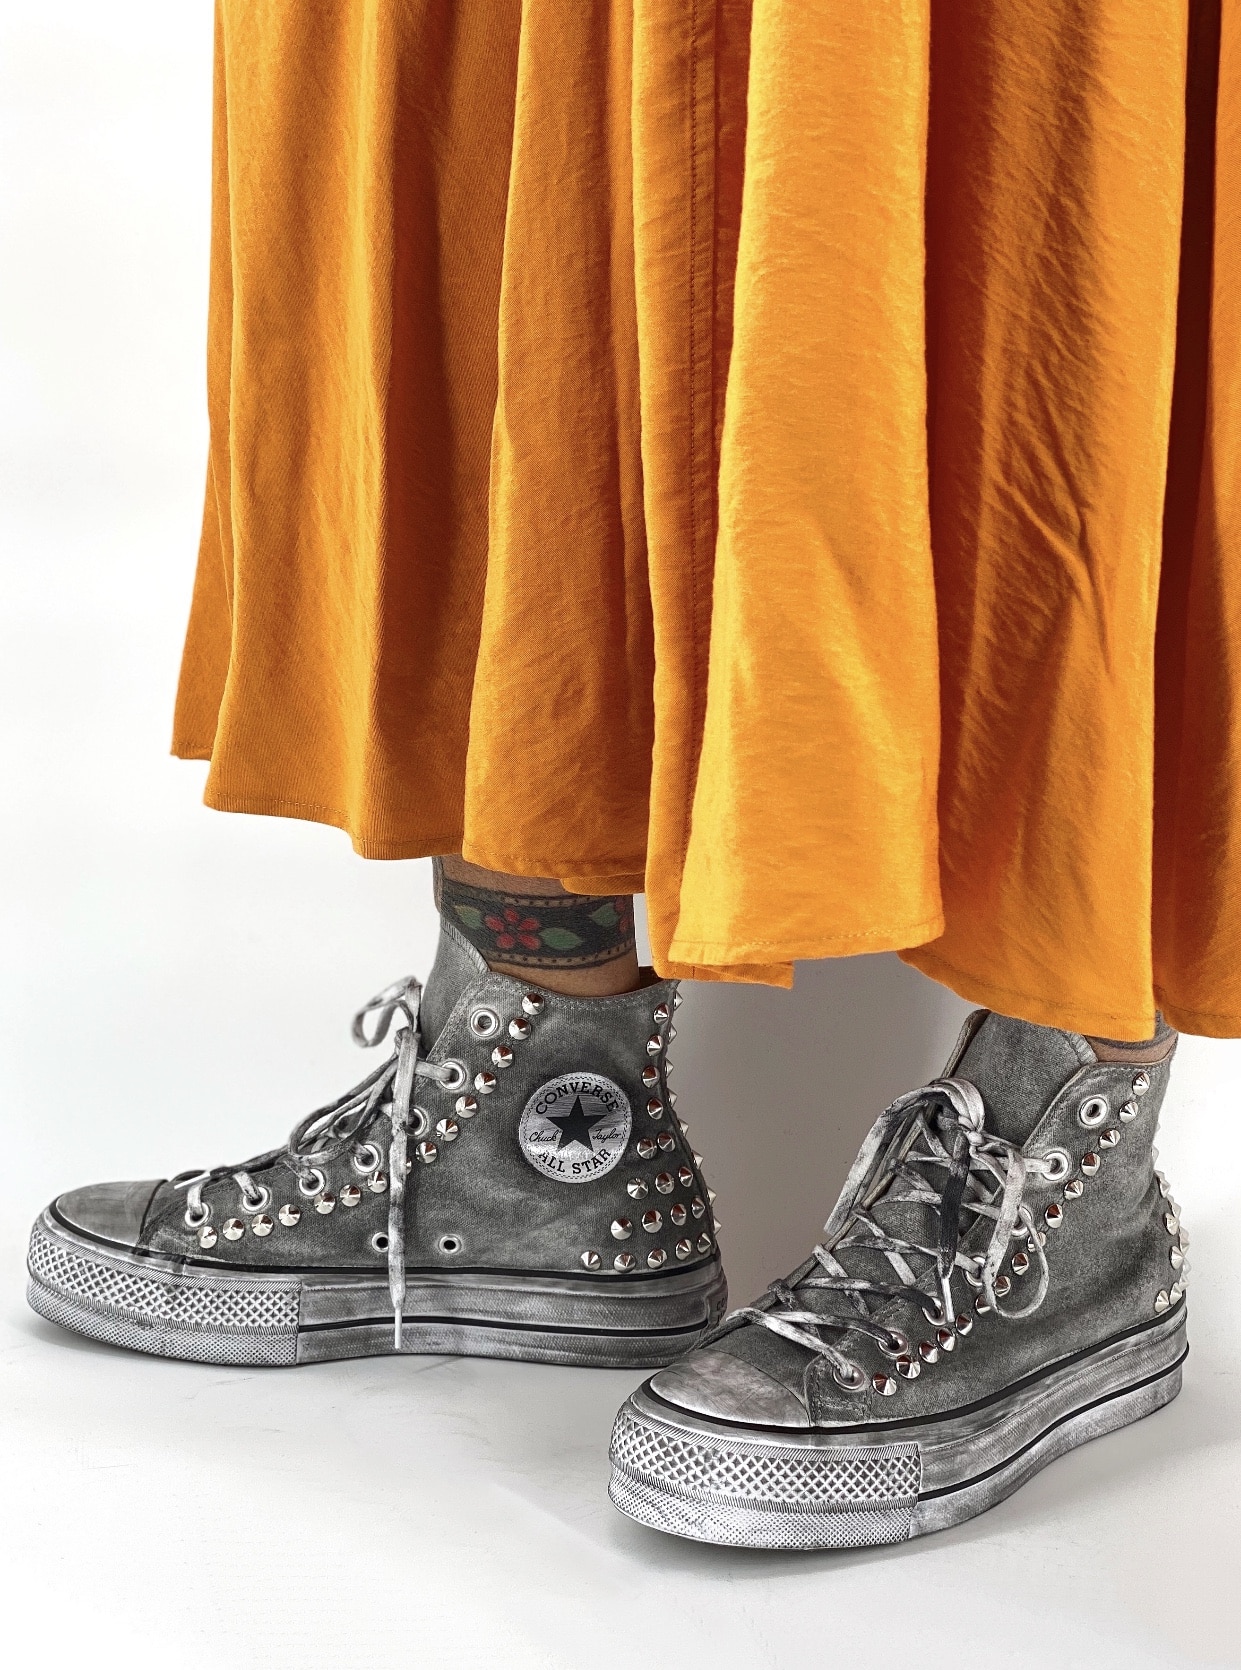 Le tue scarpe Converse LTD Platform Grey Heel Borchie argento  personalizzate da Blazelab - Store Online